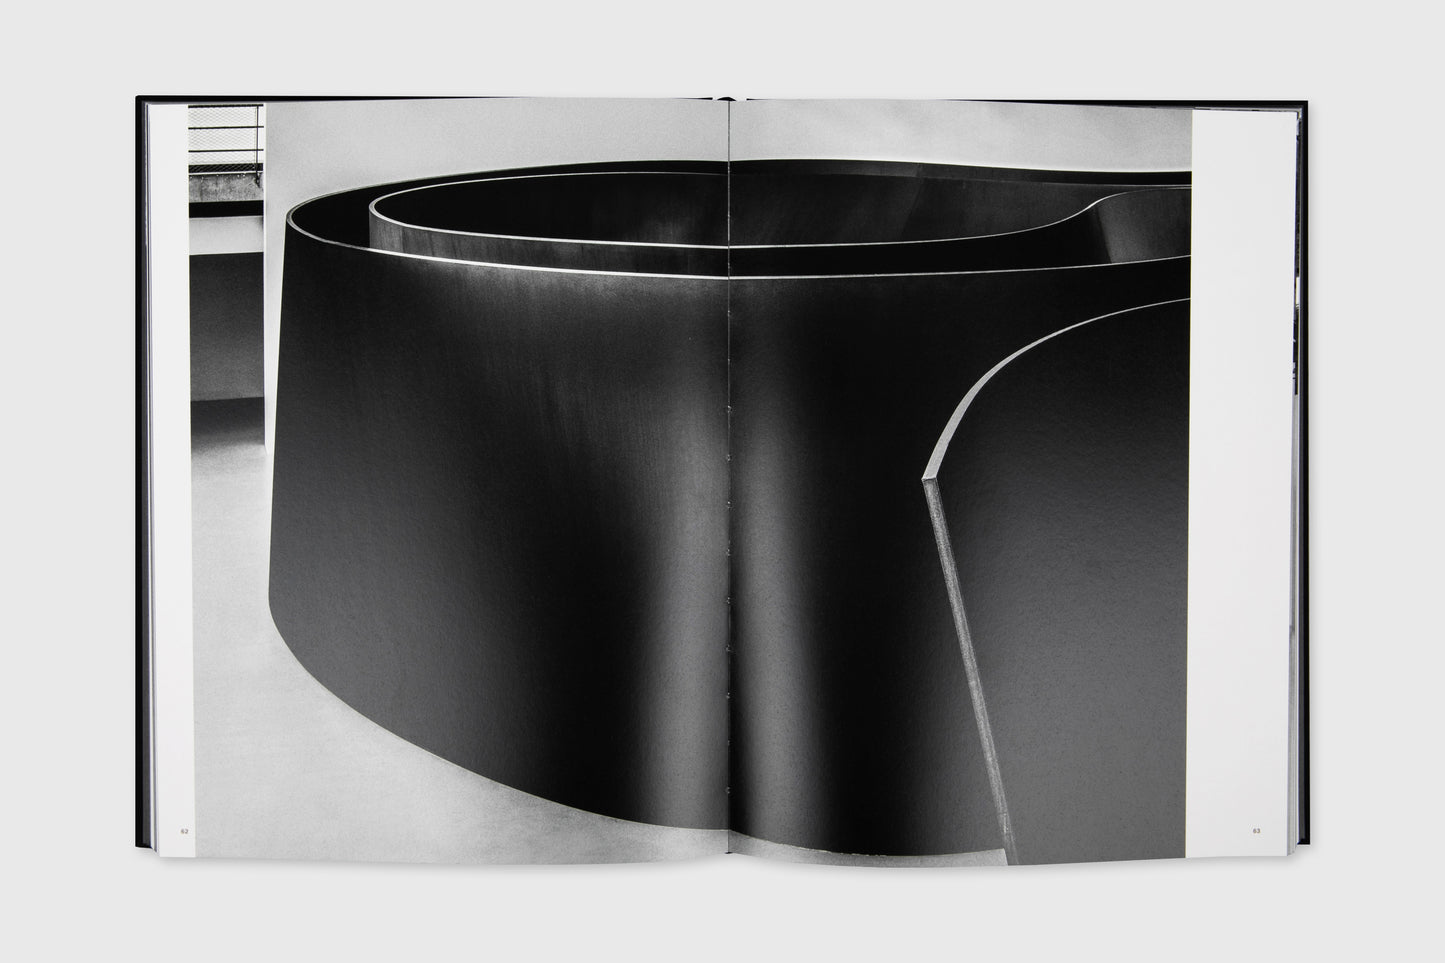 Richard Serra: Transmitter